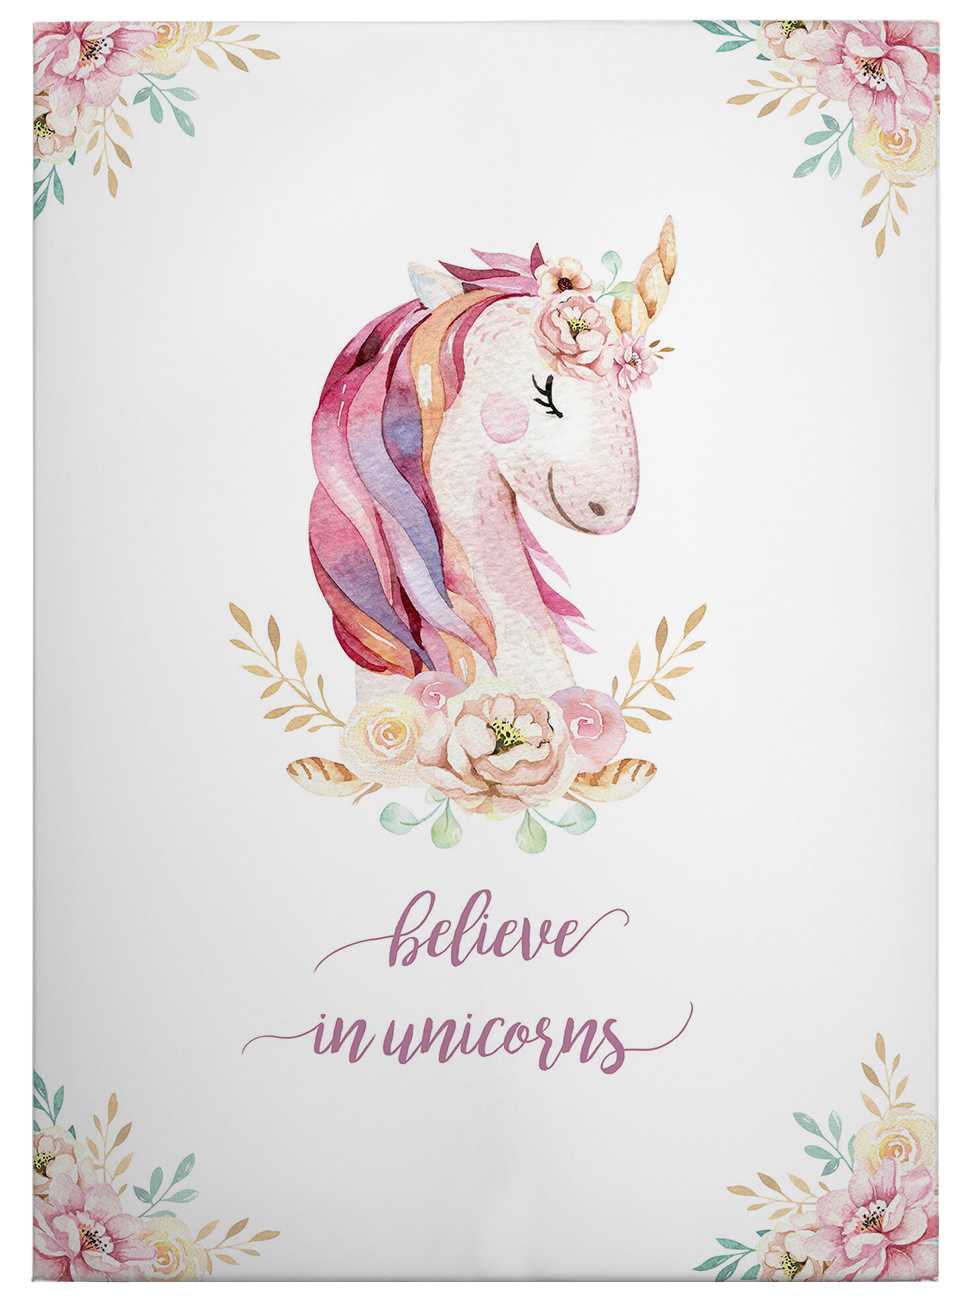             Kvilis canvas print of pink unicorn design for girls
        